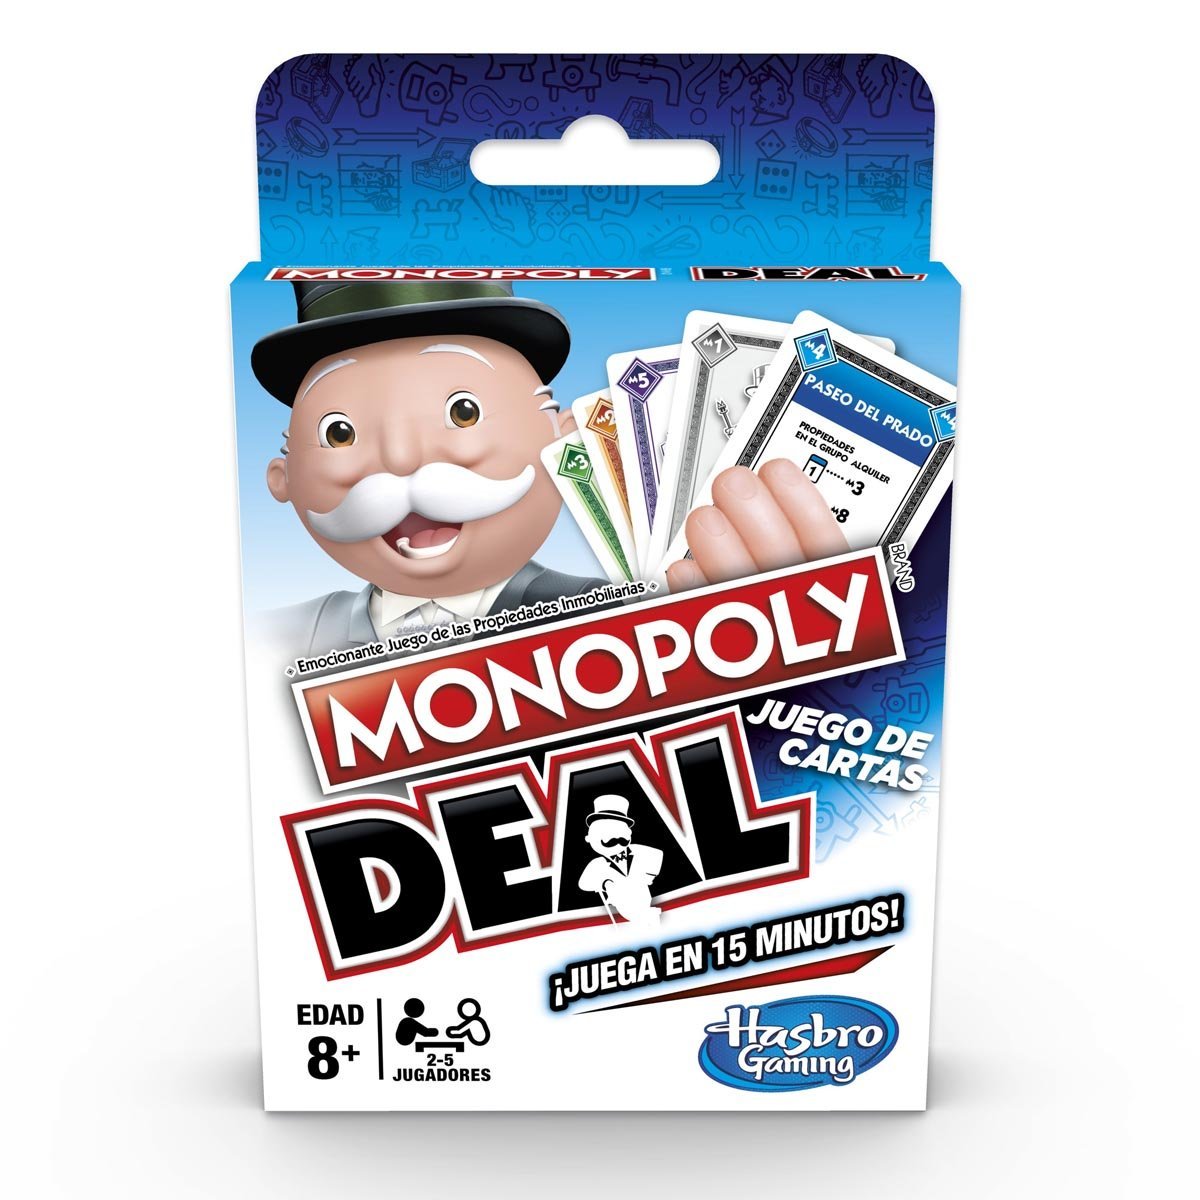 Monopoly Deal Juego de Cartas Hasbro - Juego de Mesa